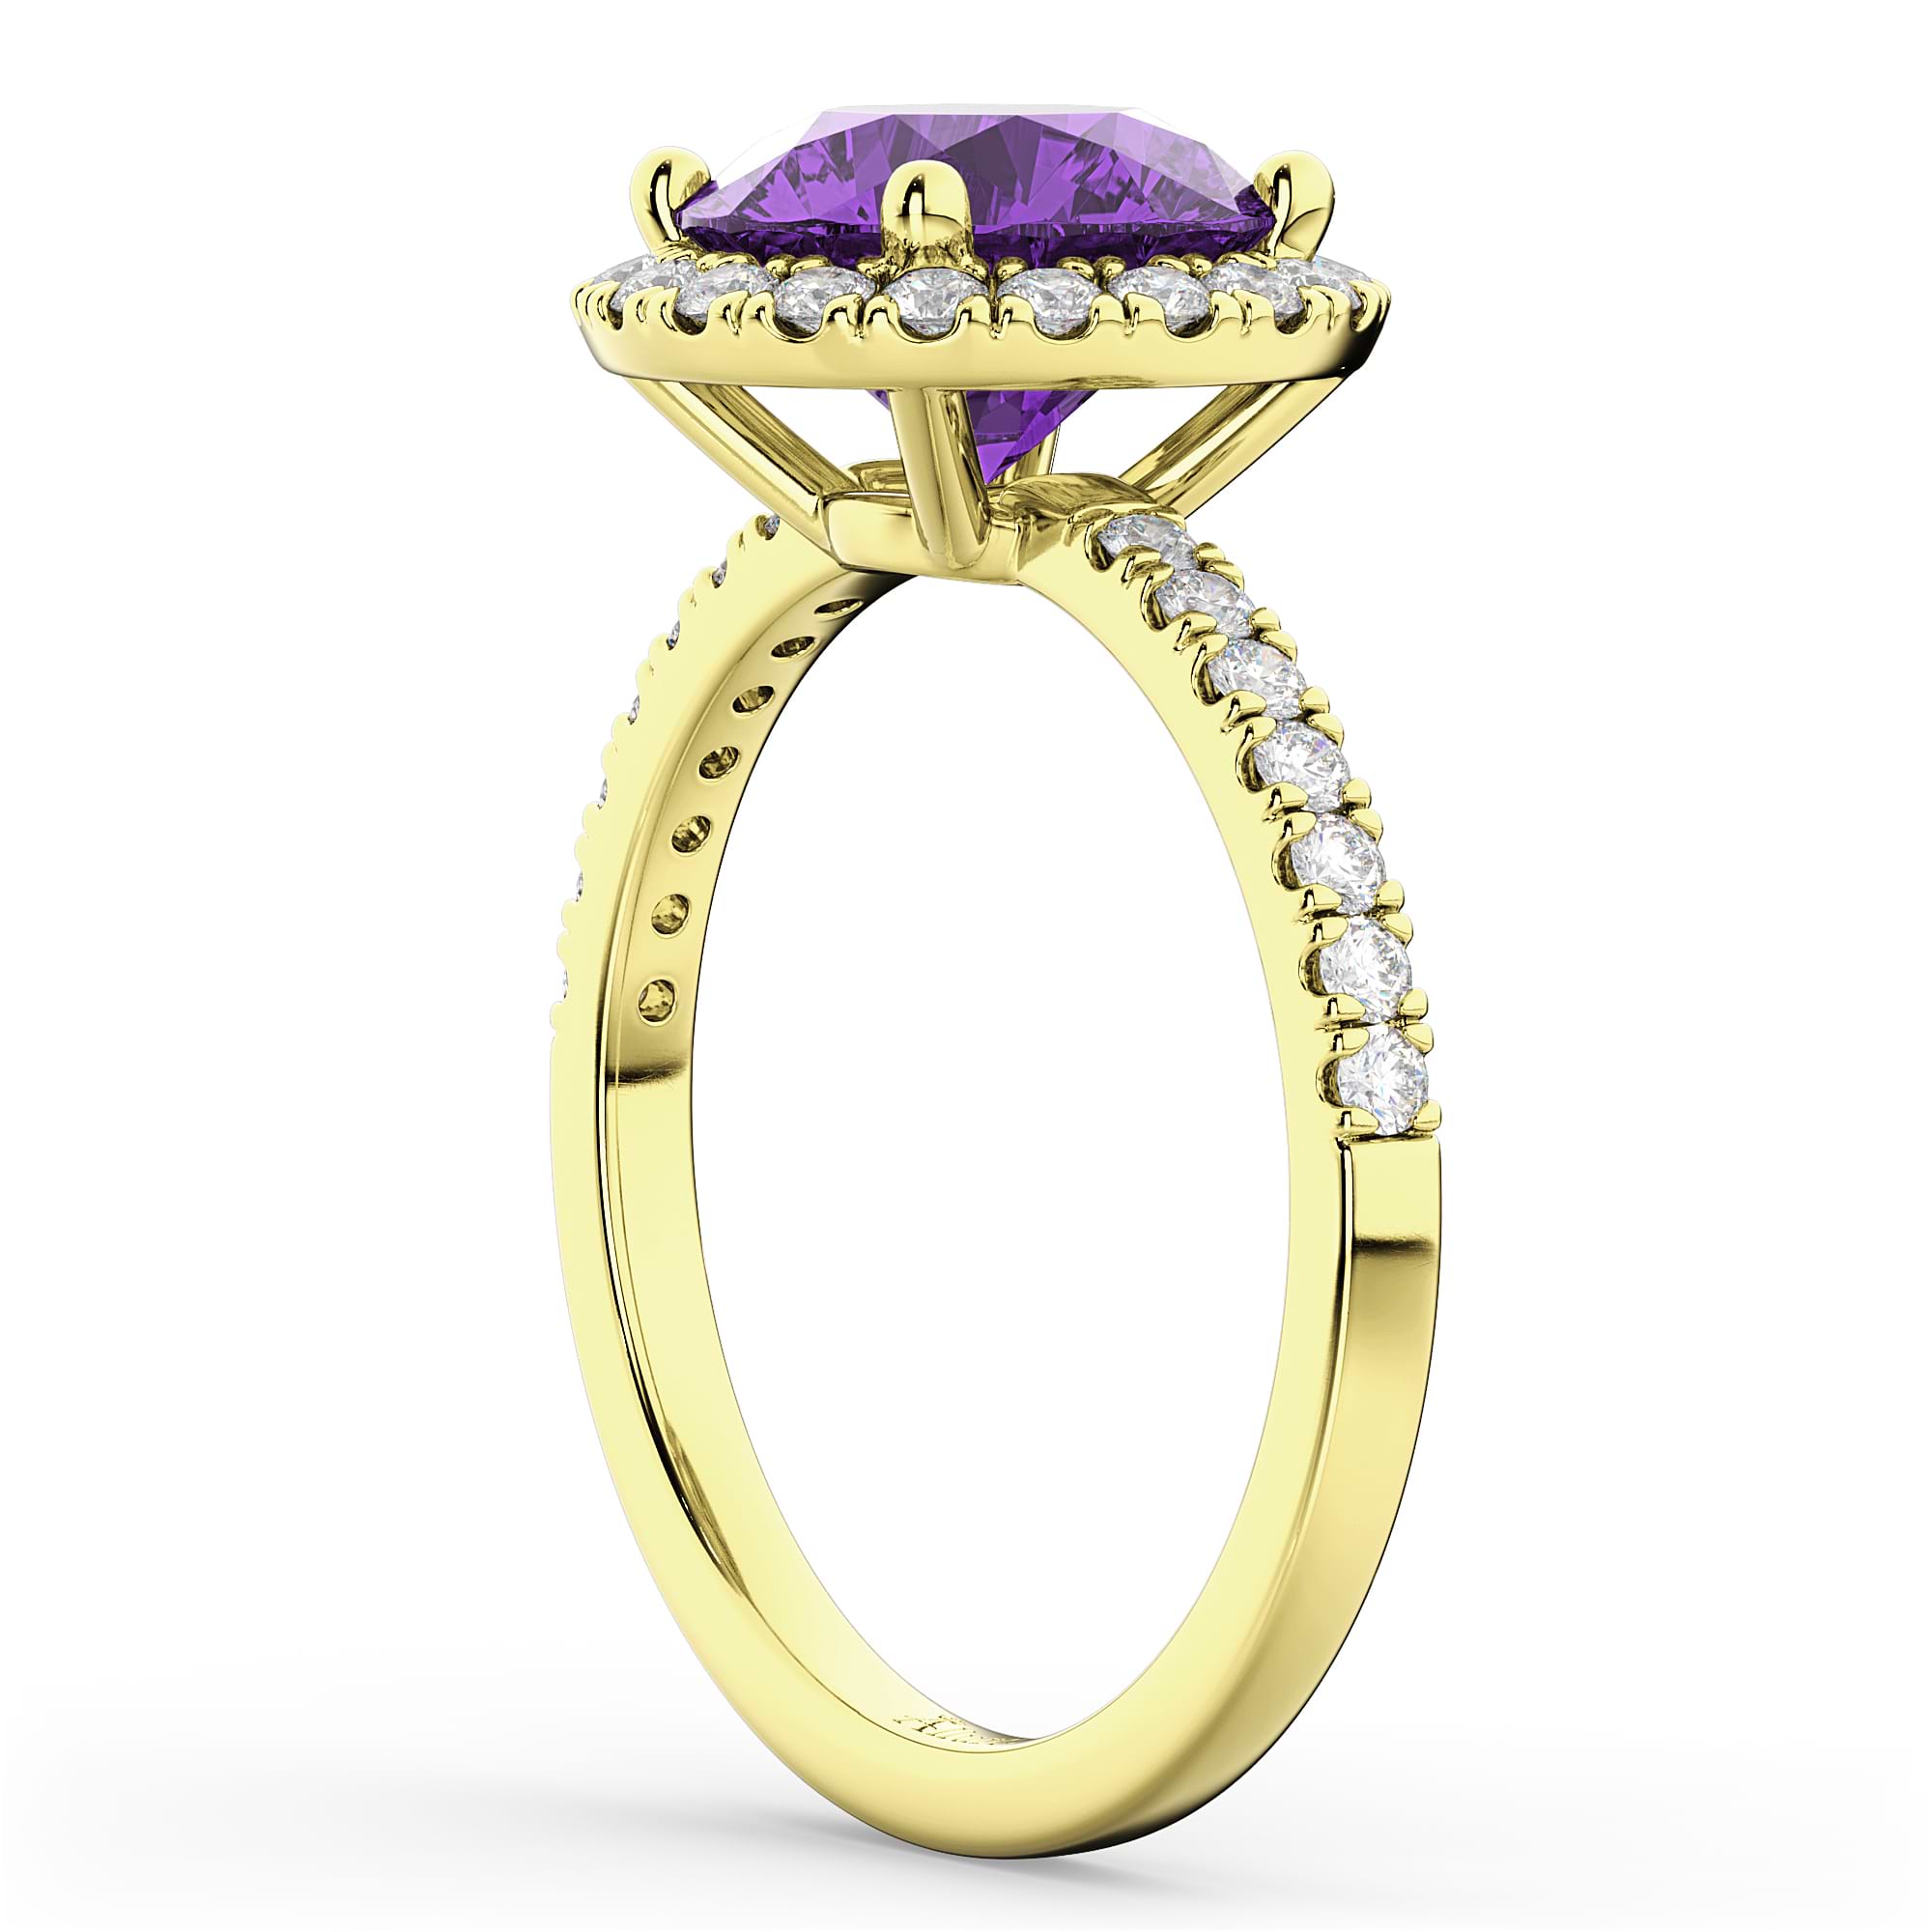 Halo Amethyst & Diamond Engagement Ring 14K Yellow Gold 2.30ct